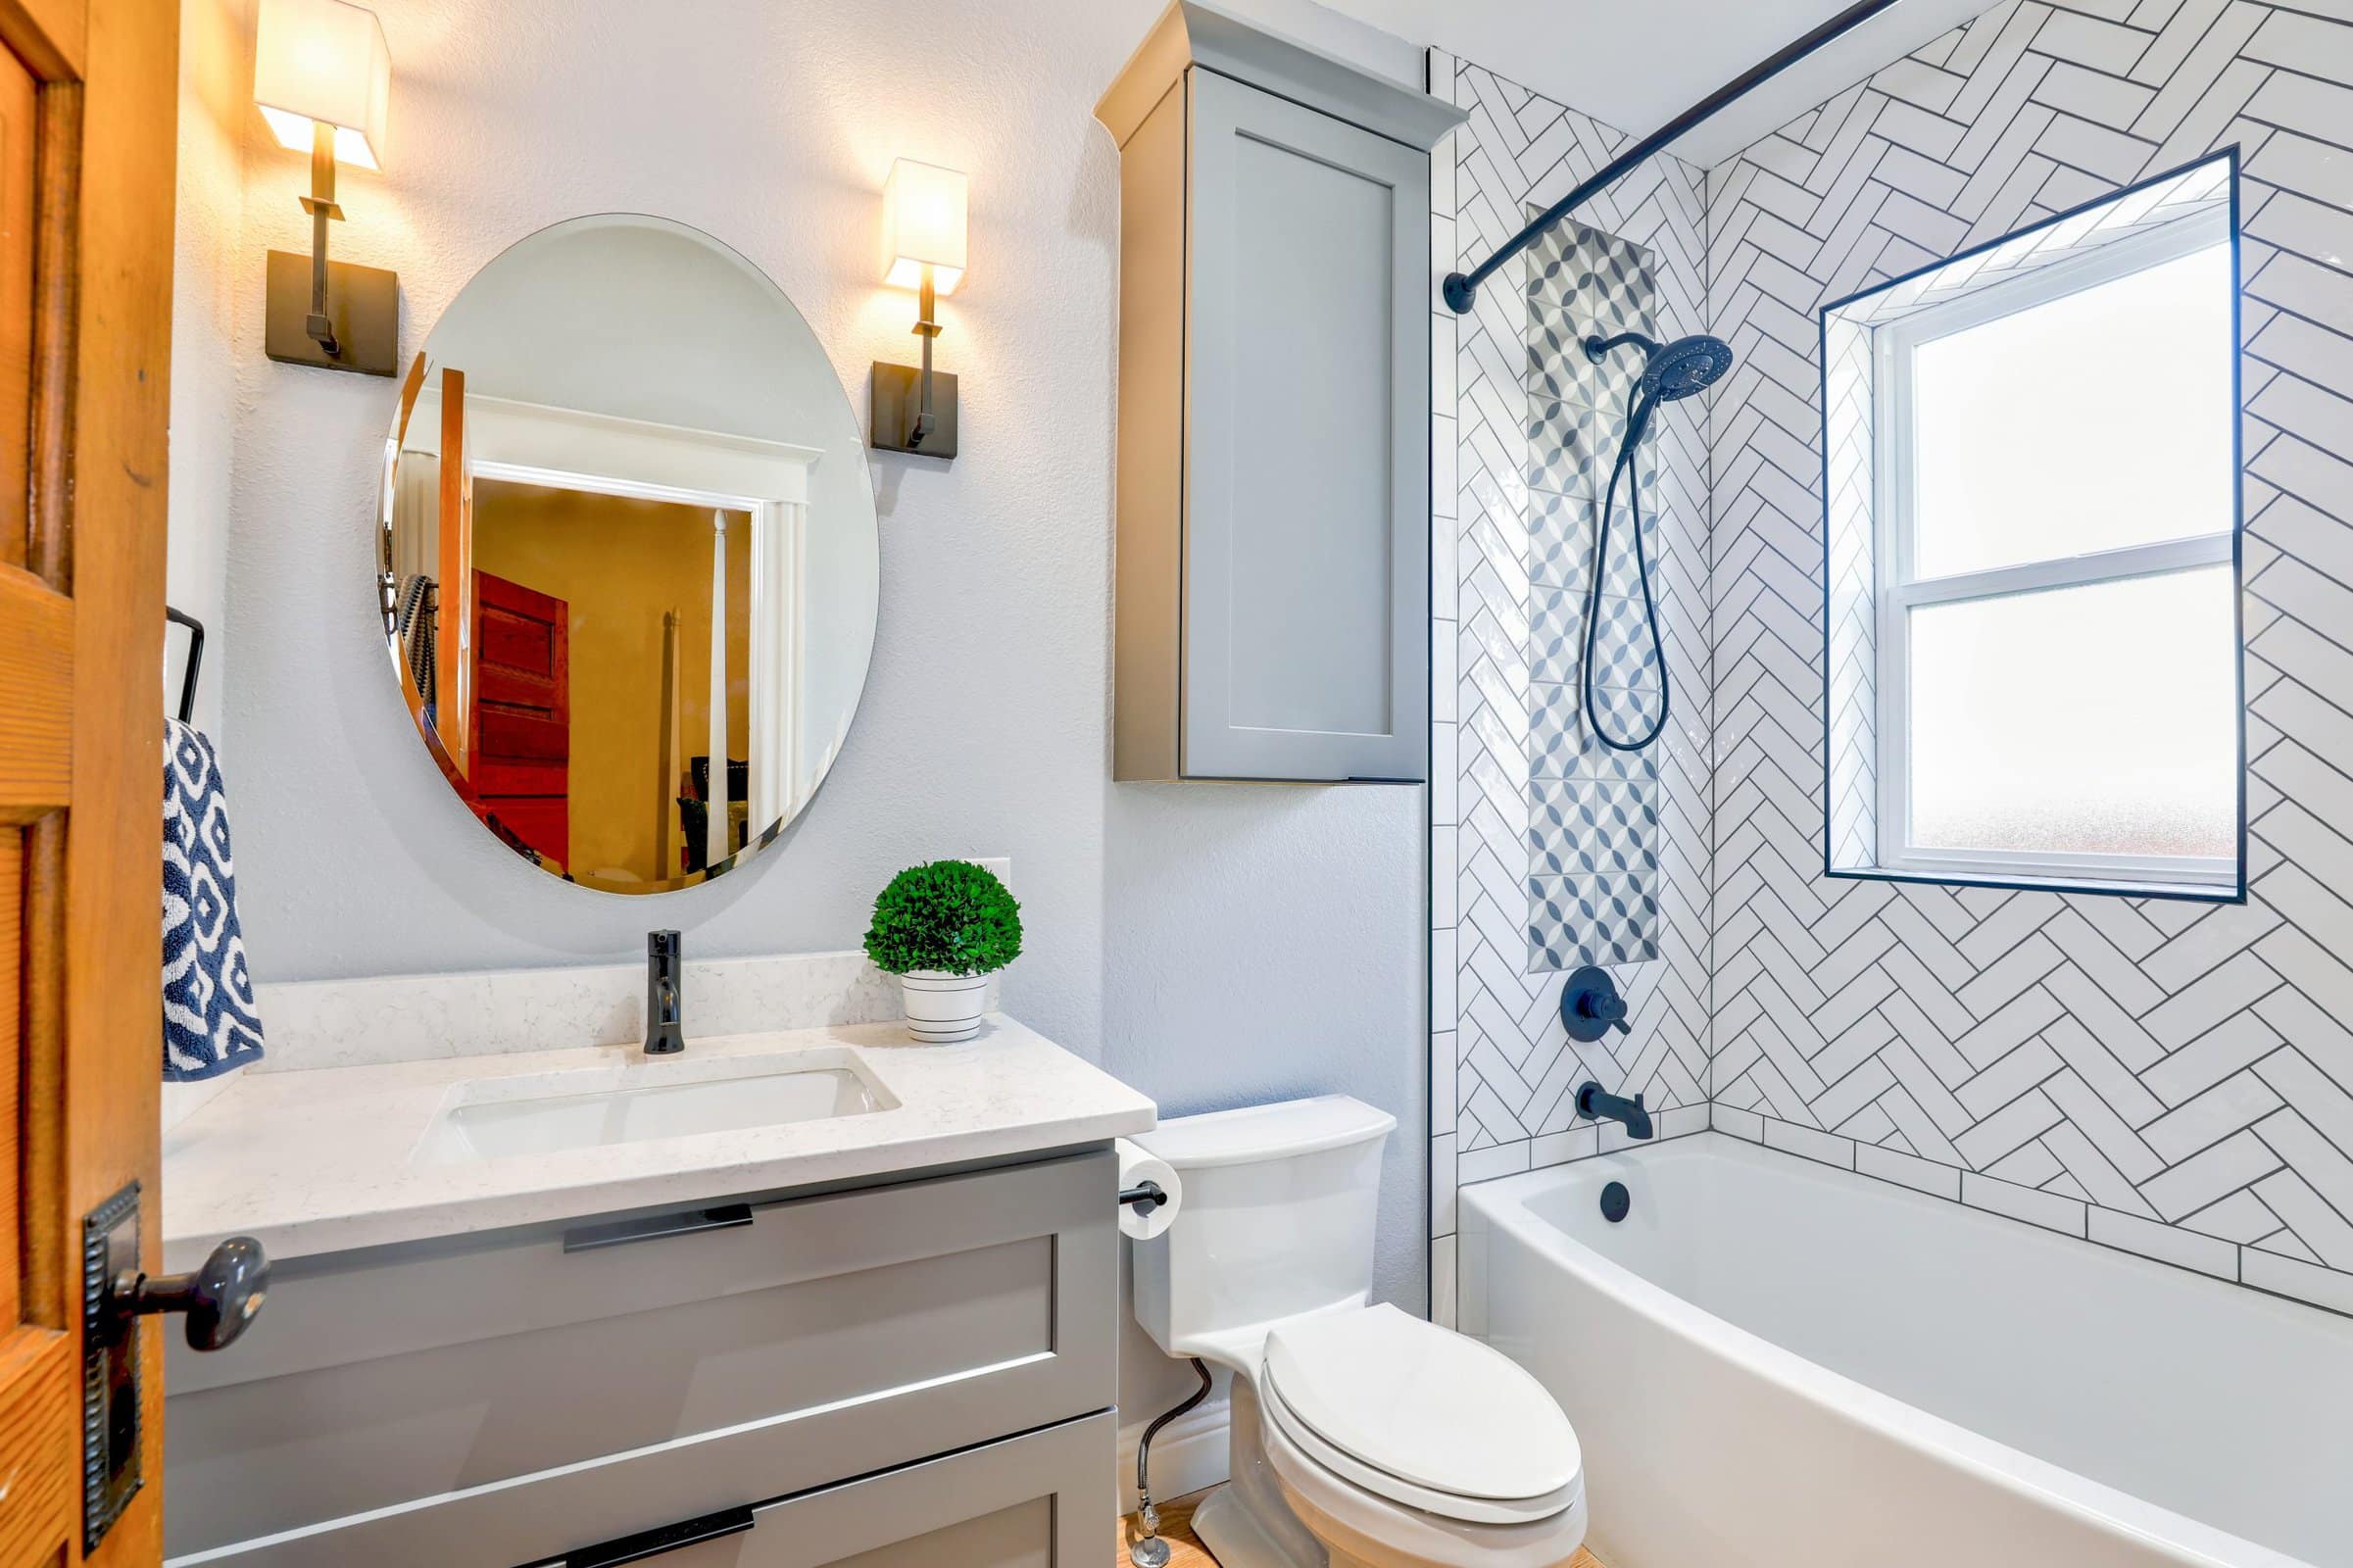  Herringbone Tiles Bathroom Ideas scaled